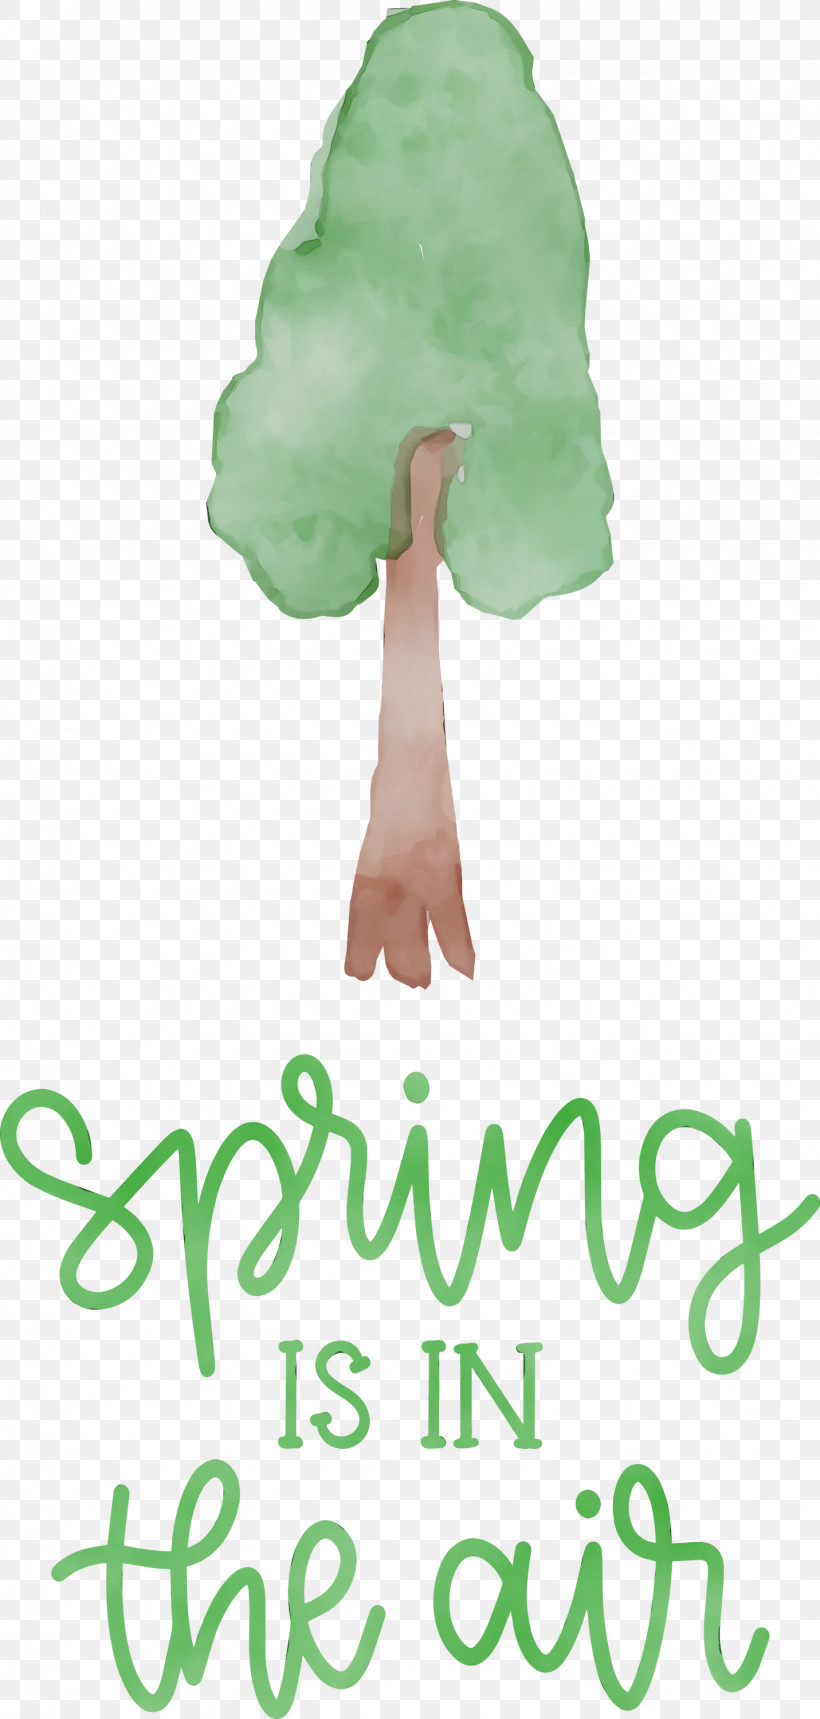 Meter M-tree Behavior Human Tree, PNG, 1431x3000px, Spring Is In The Air, Behavior, Biology, Human, Meter Download Free